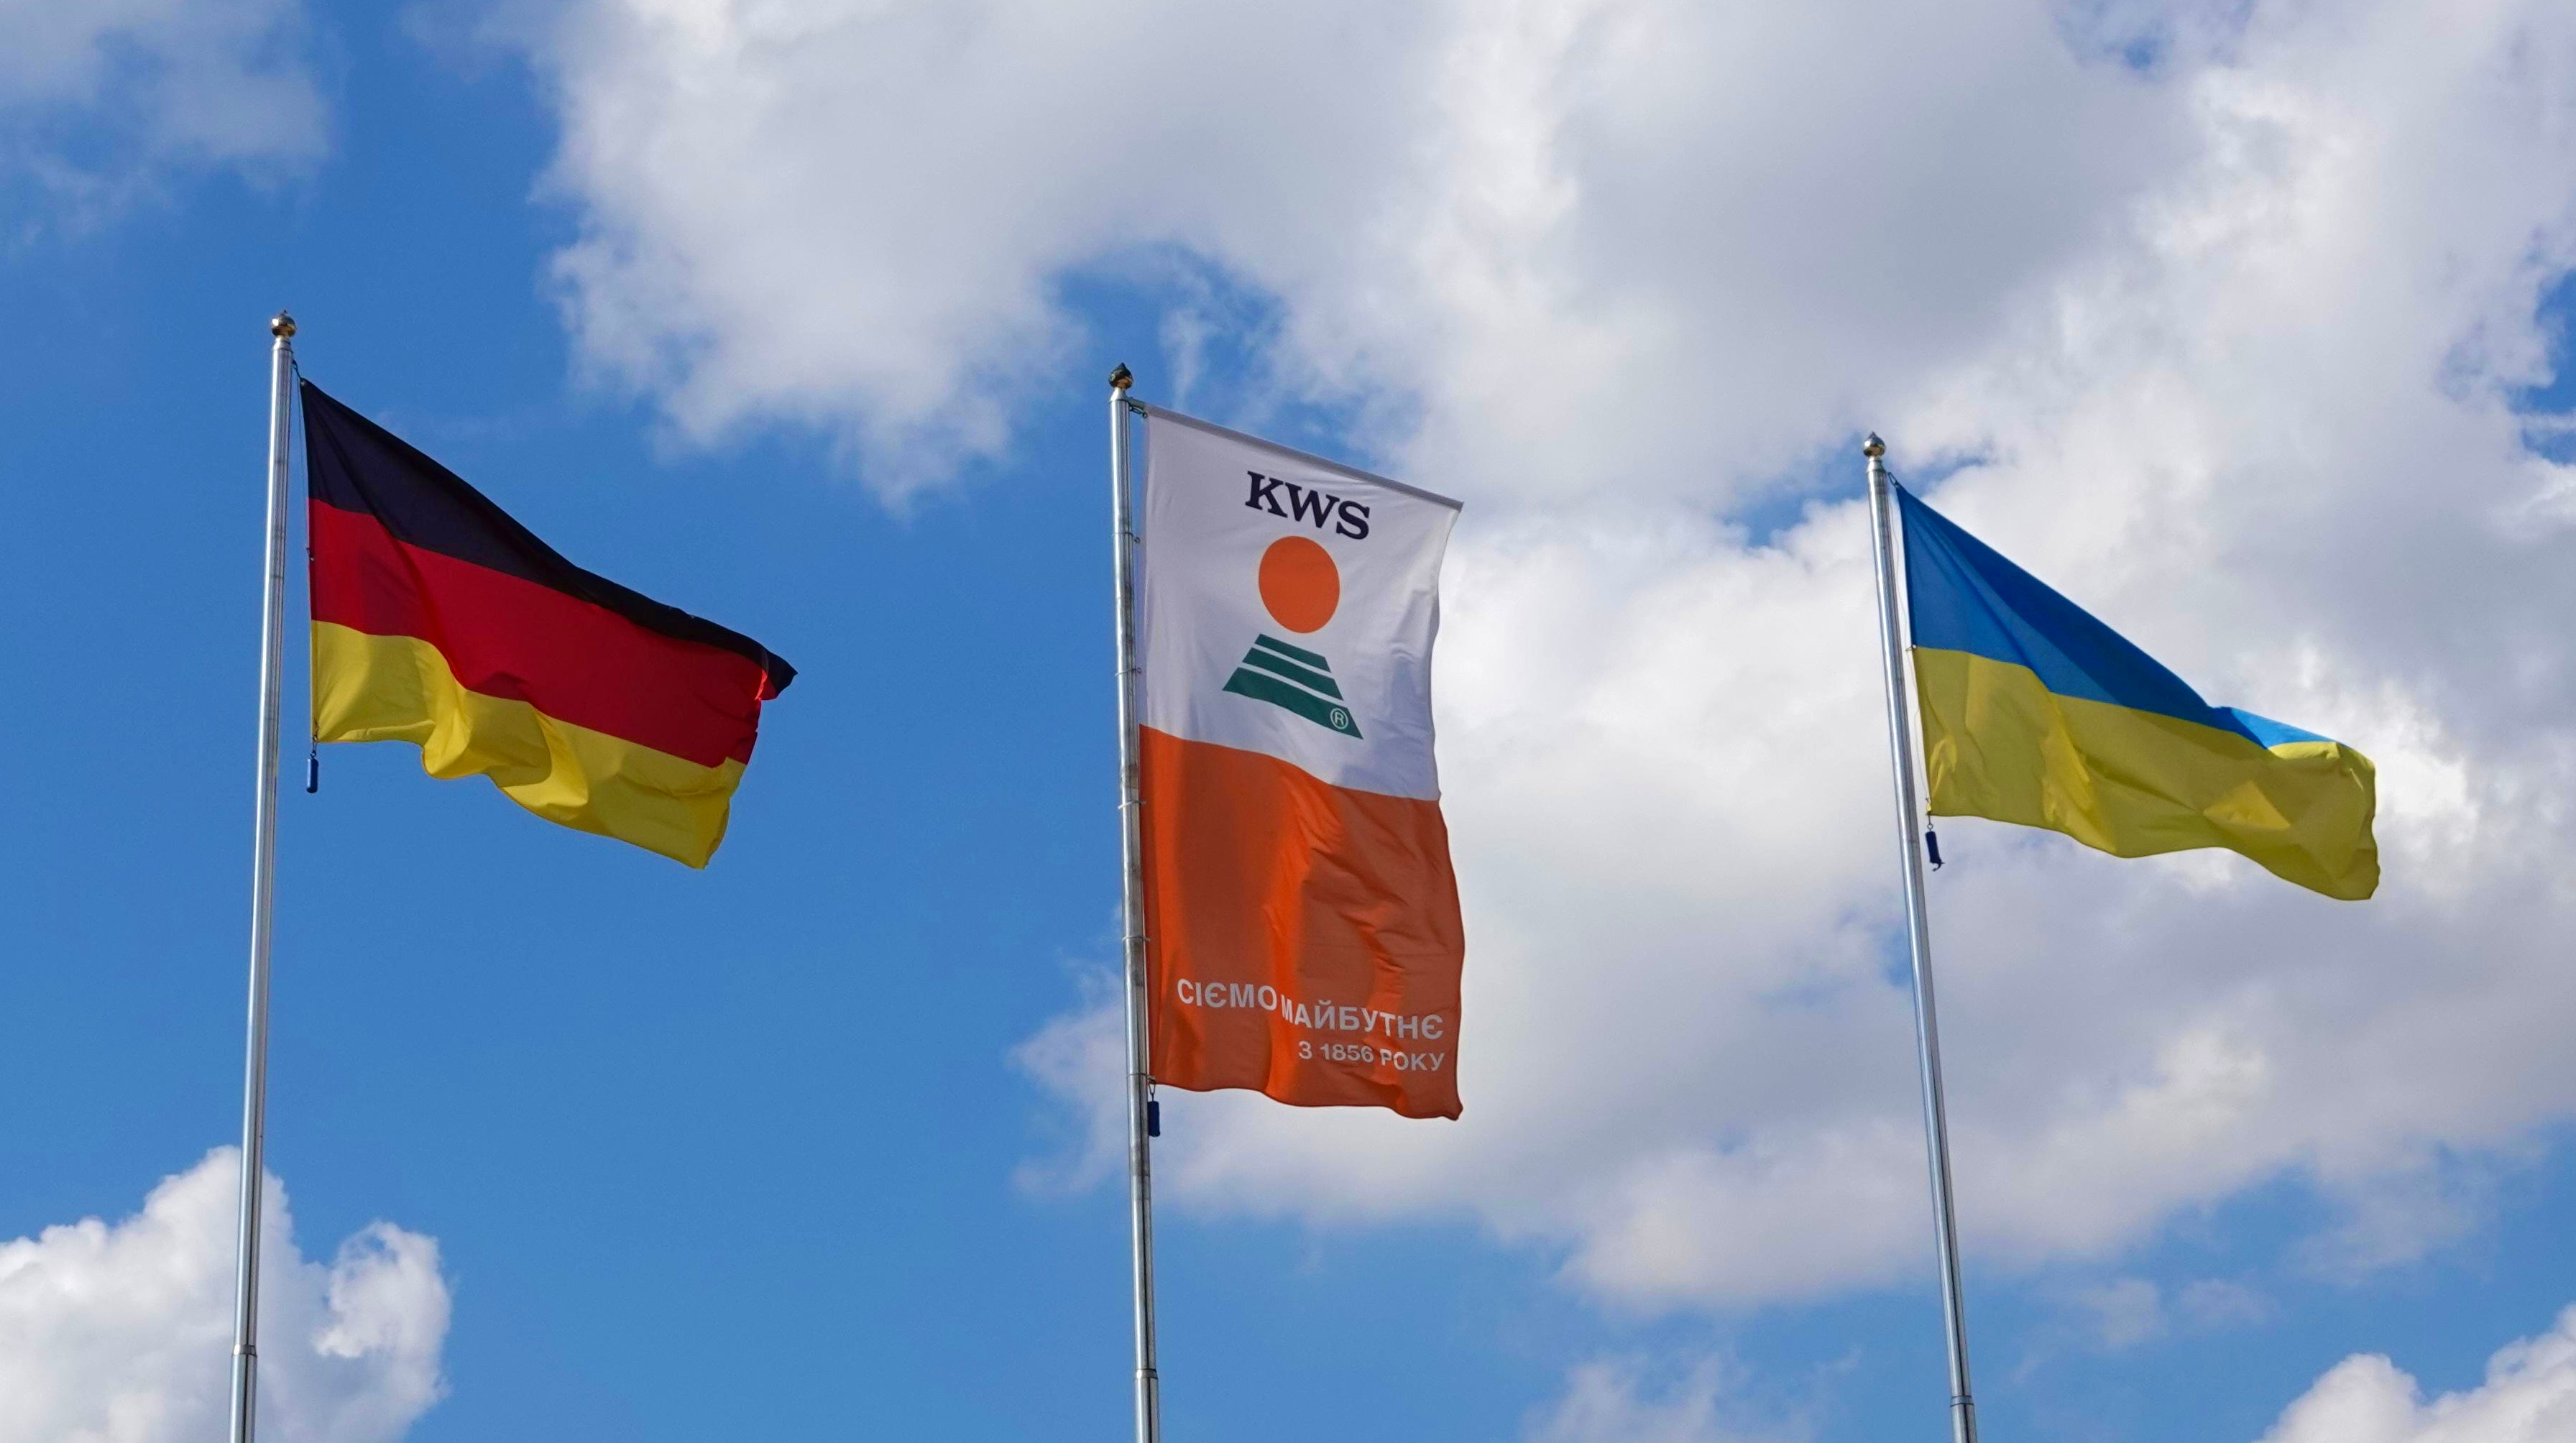 Statement: KWS business activities in Eastern Europe